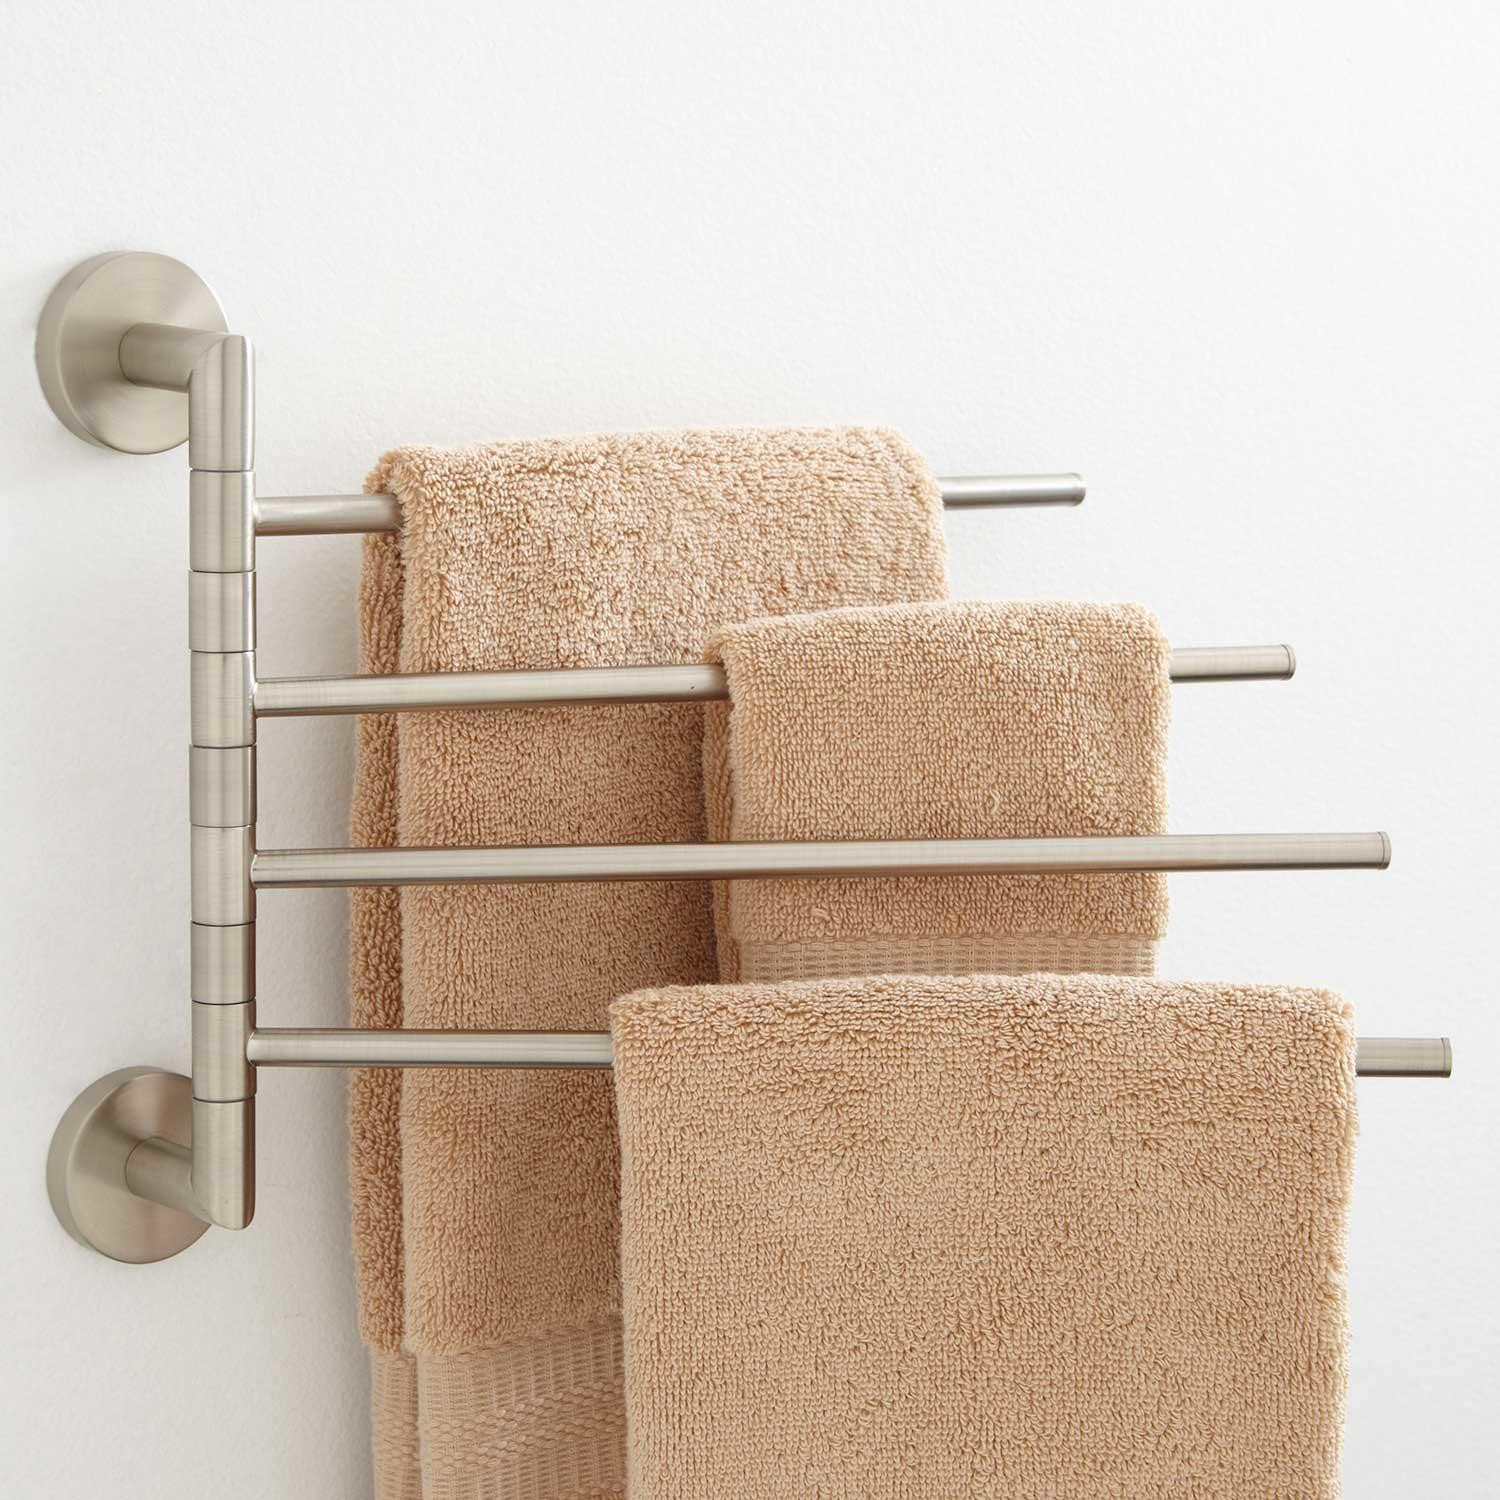 Best ideas about Bathroom Towel Bars
. Save or Pin Colvin Quadruple Swing Arm Towel Bar Bathroom Now.